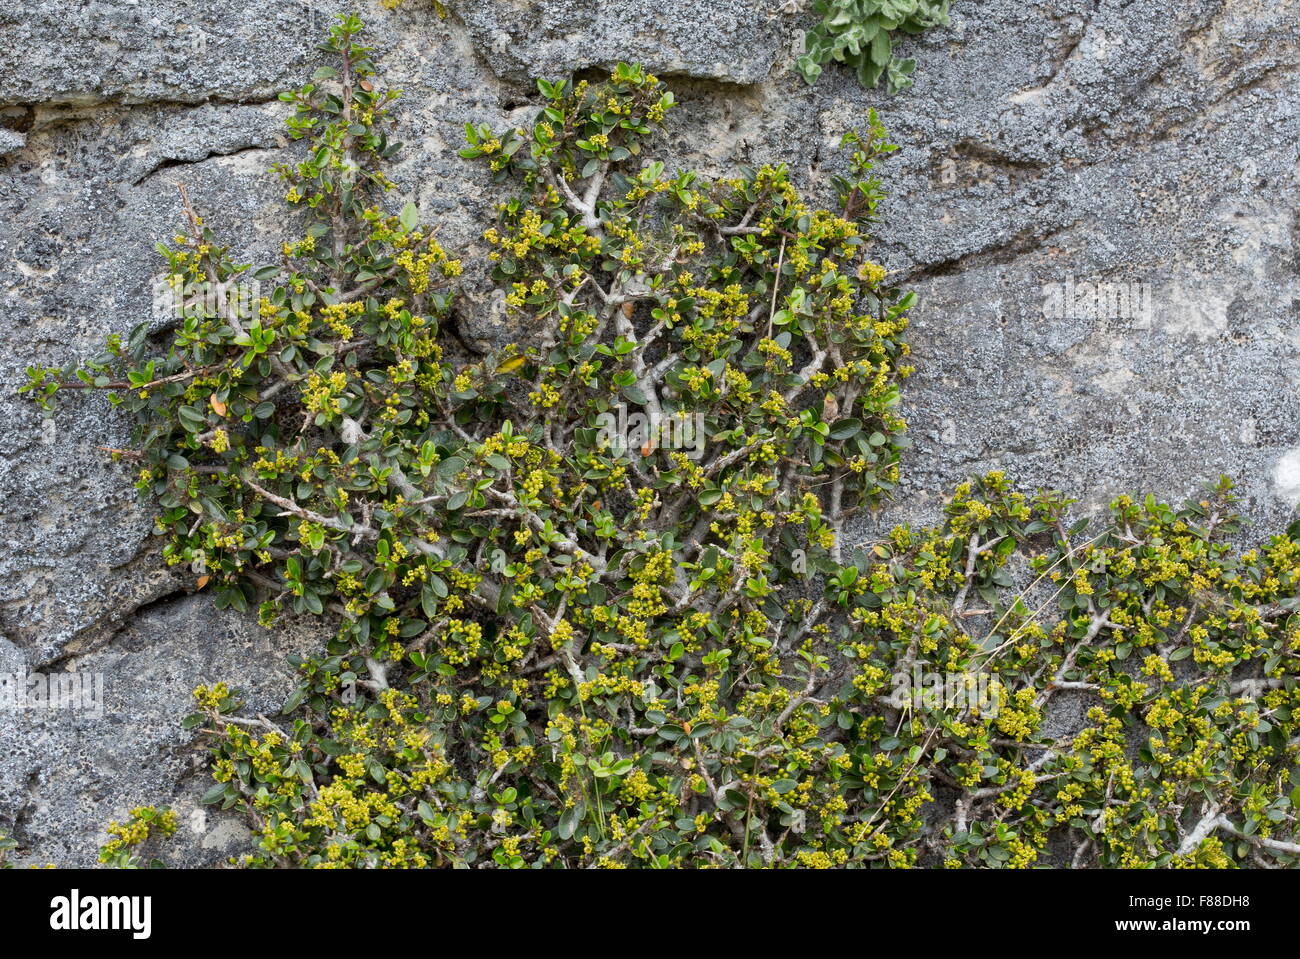 Un prostrati frangola, sulla scogliera: Rhamnus alaternus myrtifolius ssp, in fiore. Sierra de las Nieves, Spagna Foto Stock